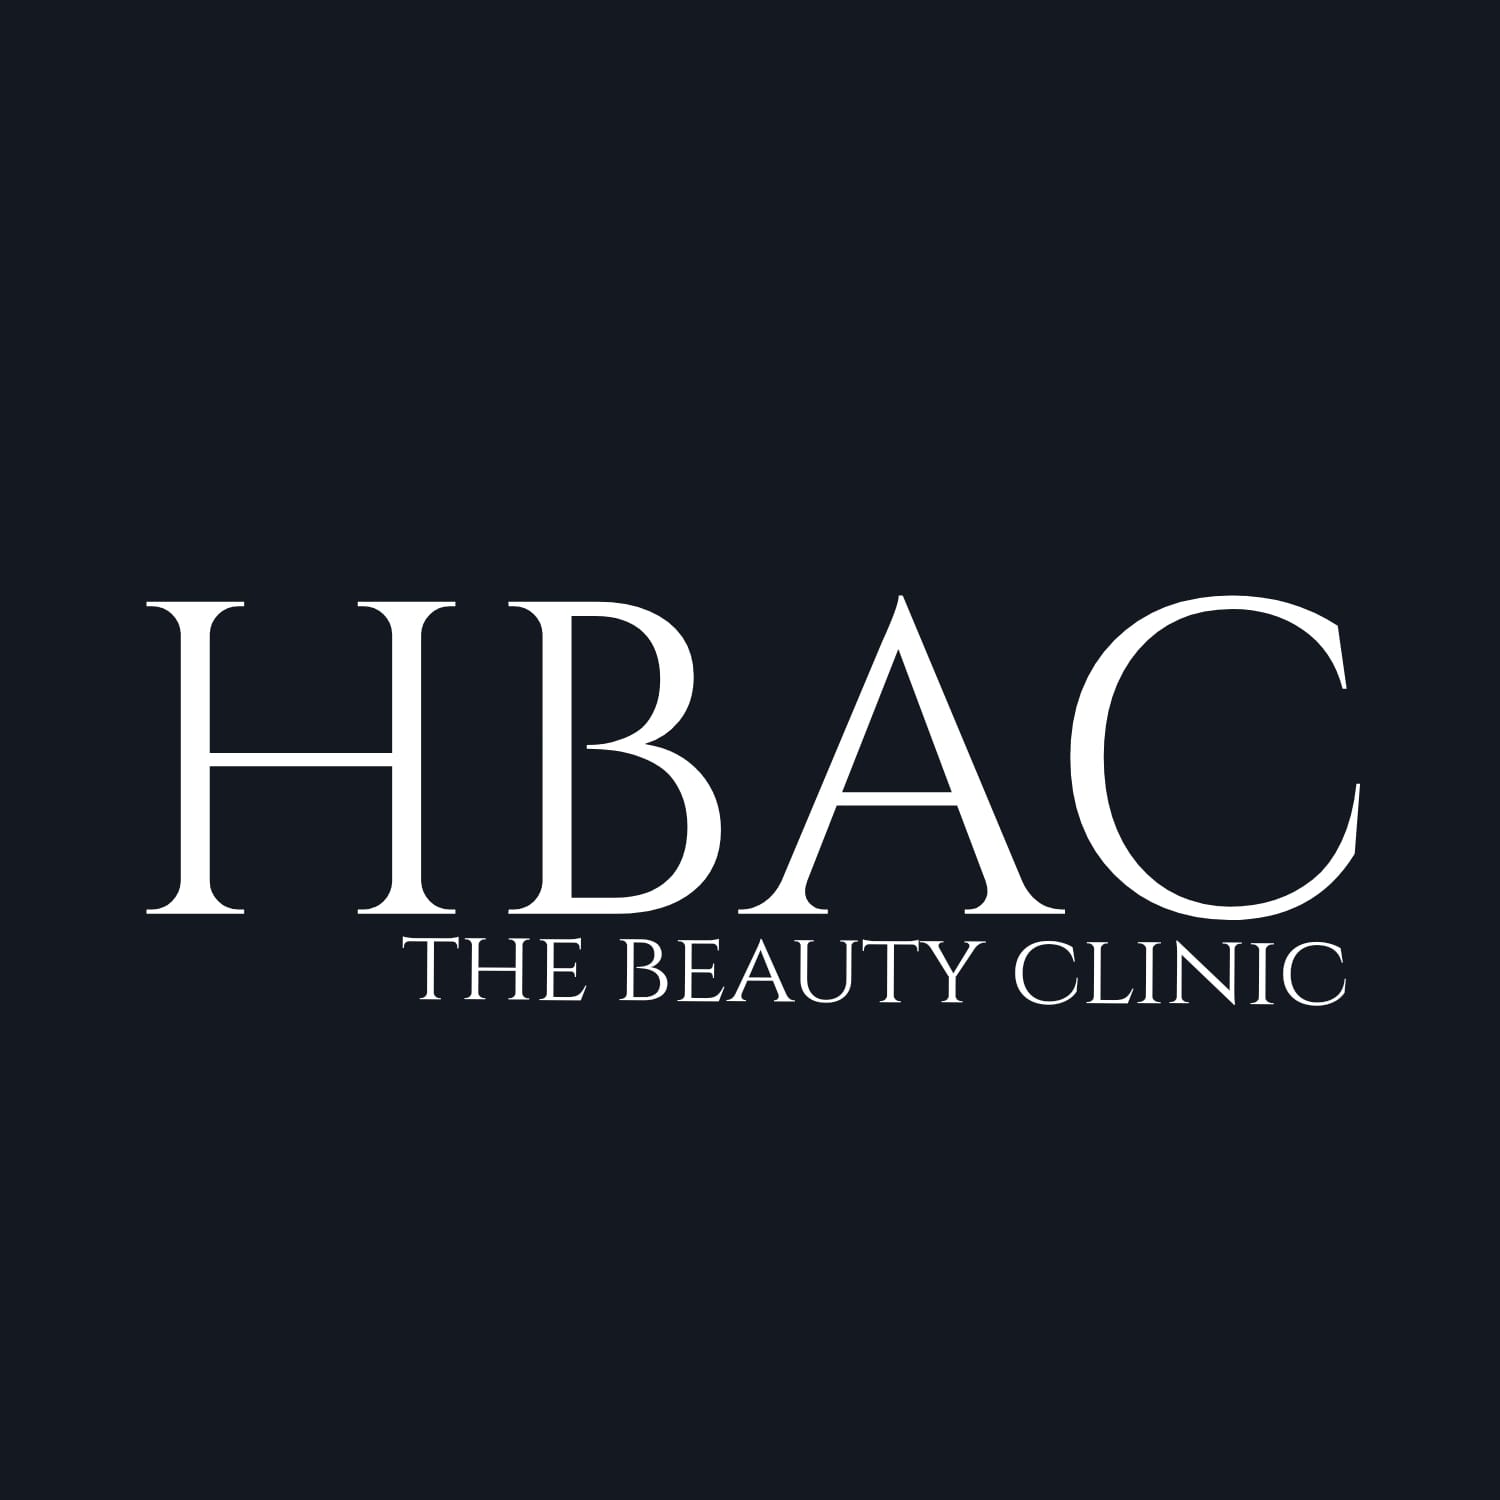 HBAC Clinic – The House of Beauty – Where dreams become reality.